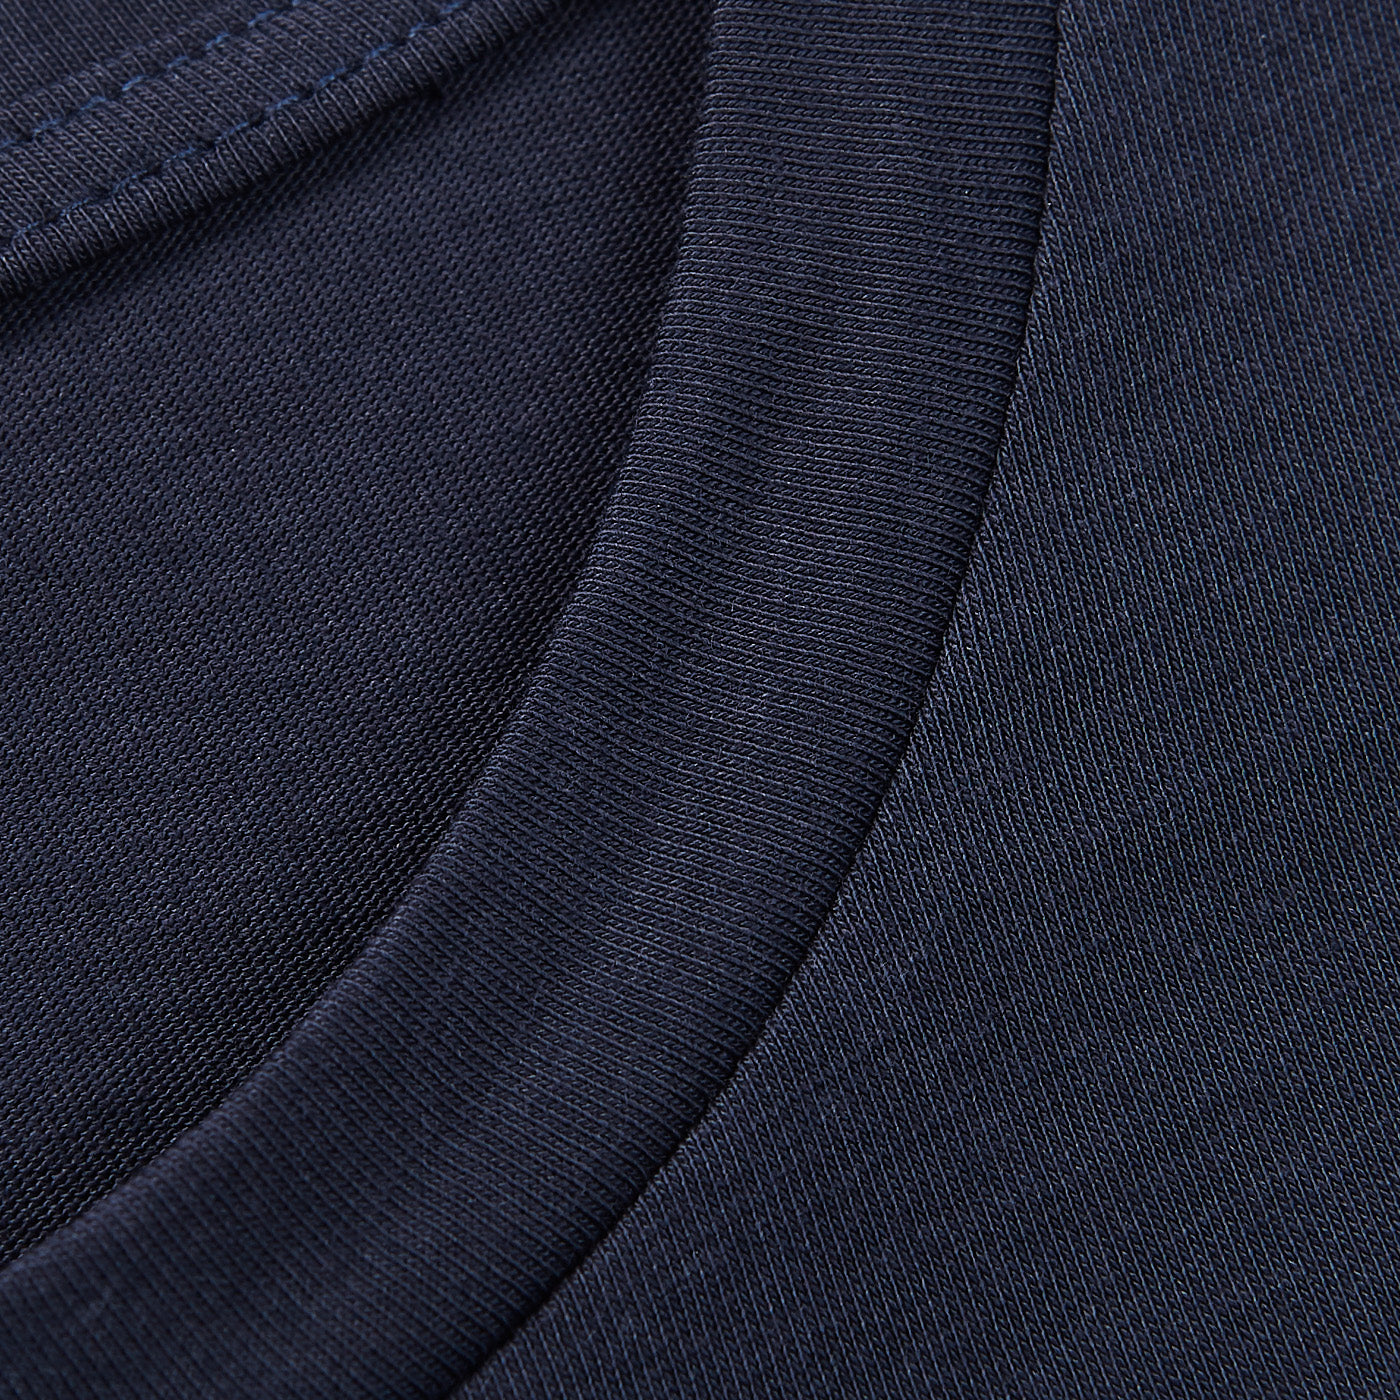 Sunspel Navy Blue Cotton Riviera Long Sleeve T-Shirt Brim